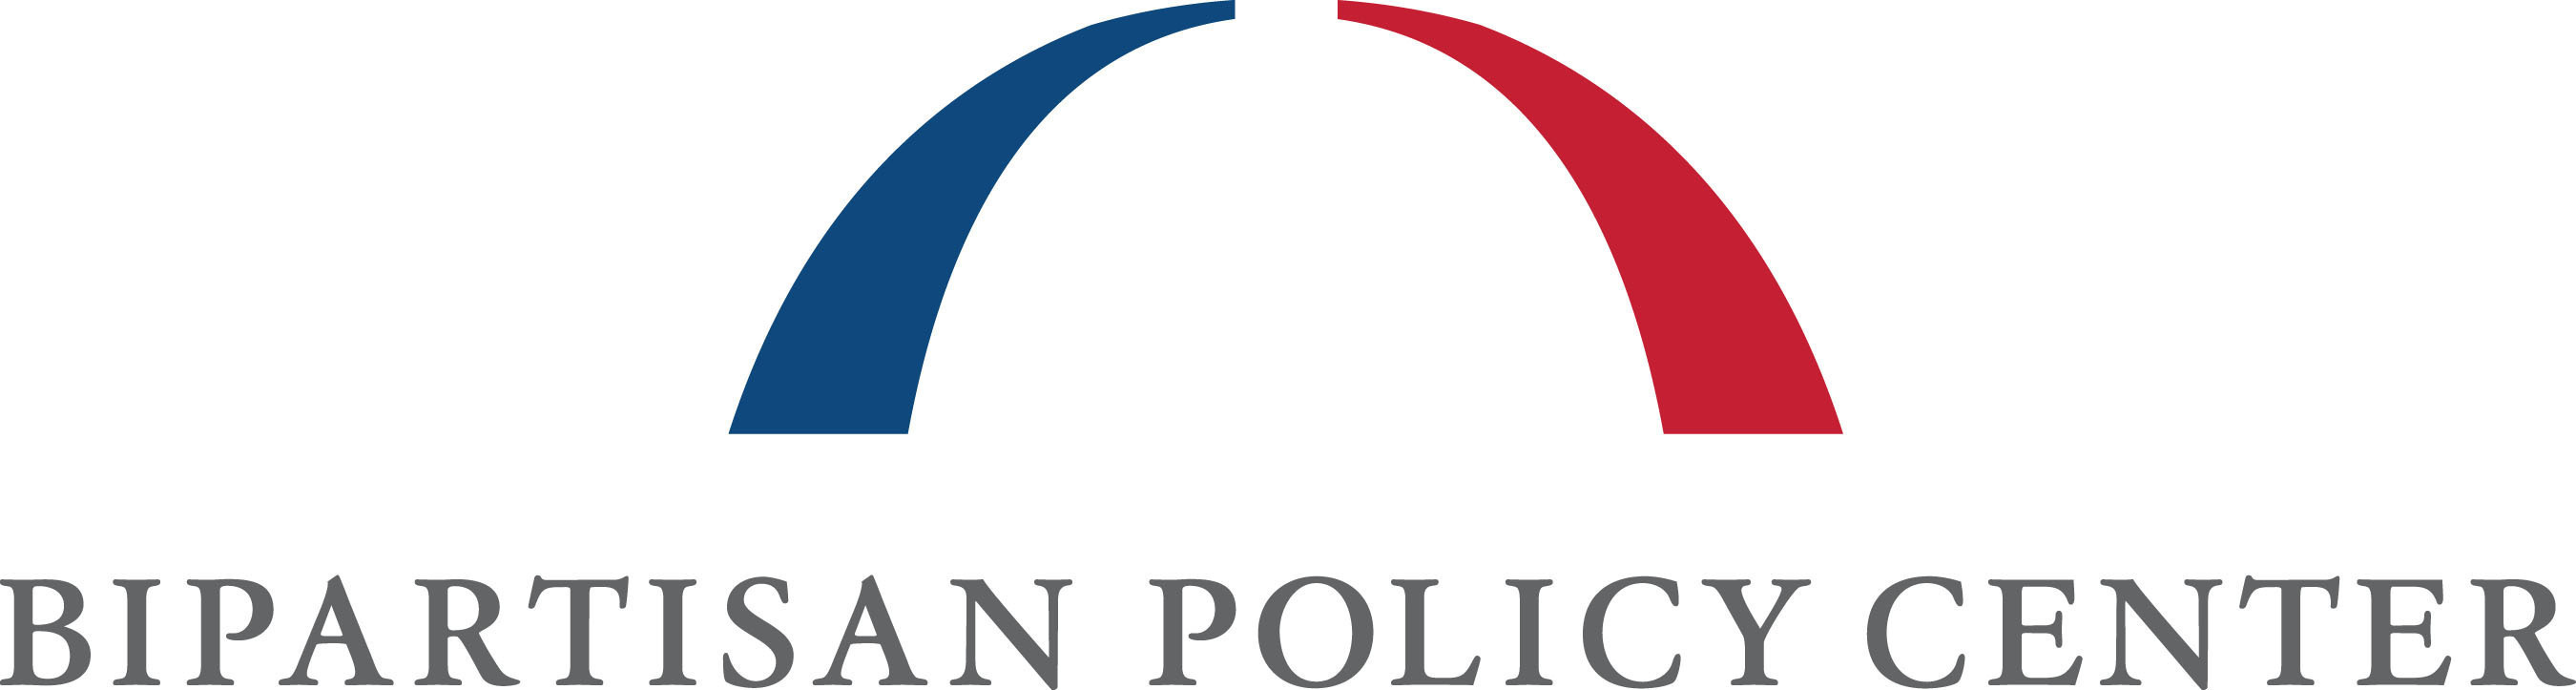 Bipartisan Policy Center Logo (PRNewsFoto/Bipartisan Policy Center) (PRNewsFoto/Bipartisan Policy Center)